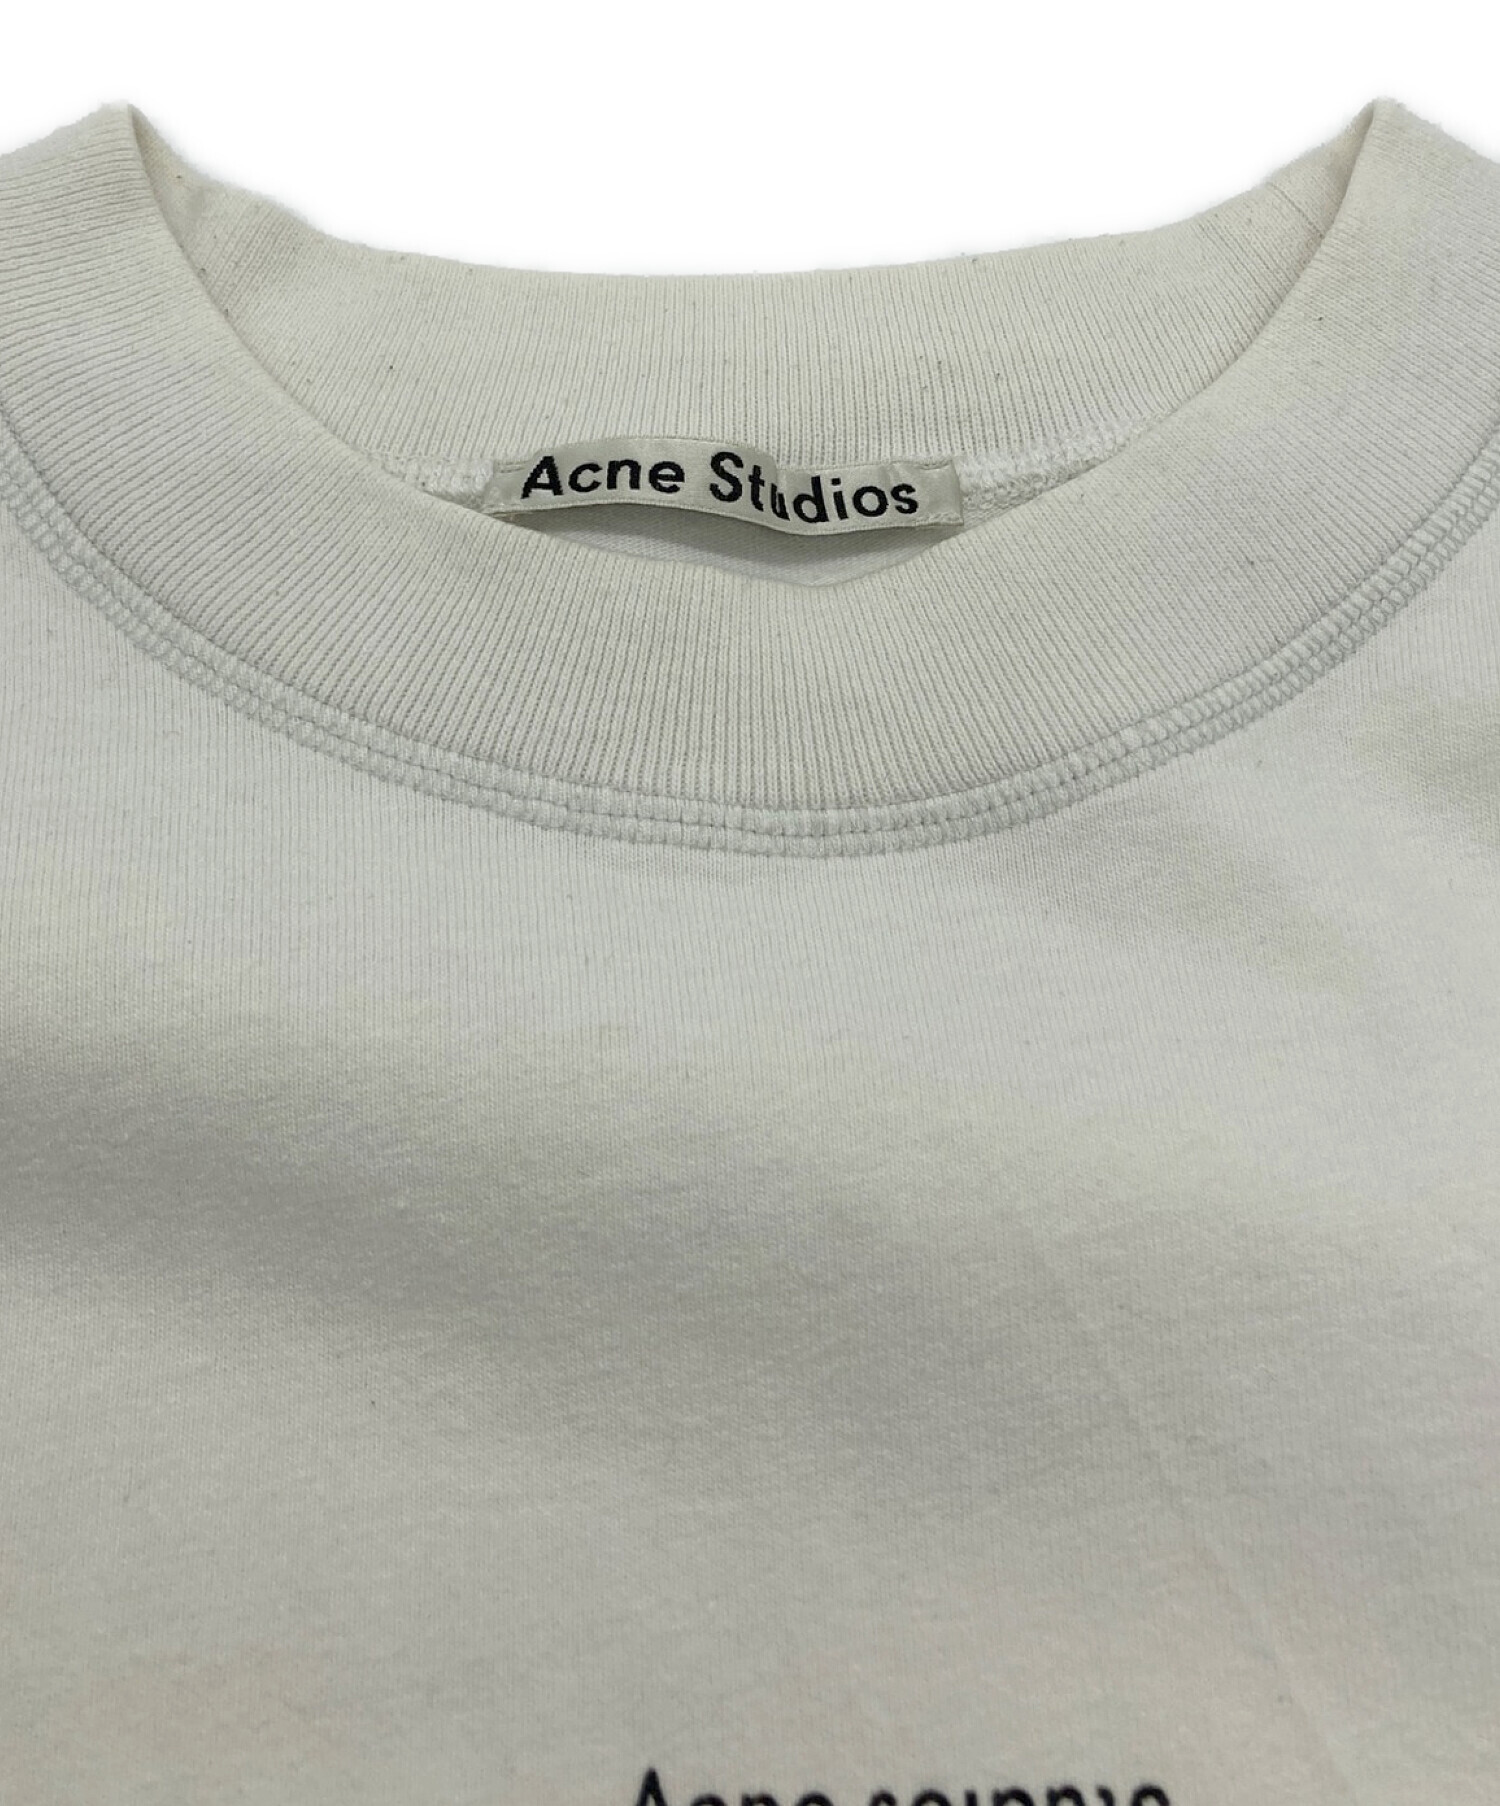 Acne studios (アクネストゥディオズ) リバースロゴTシャツ ホワイト サイズ:S